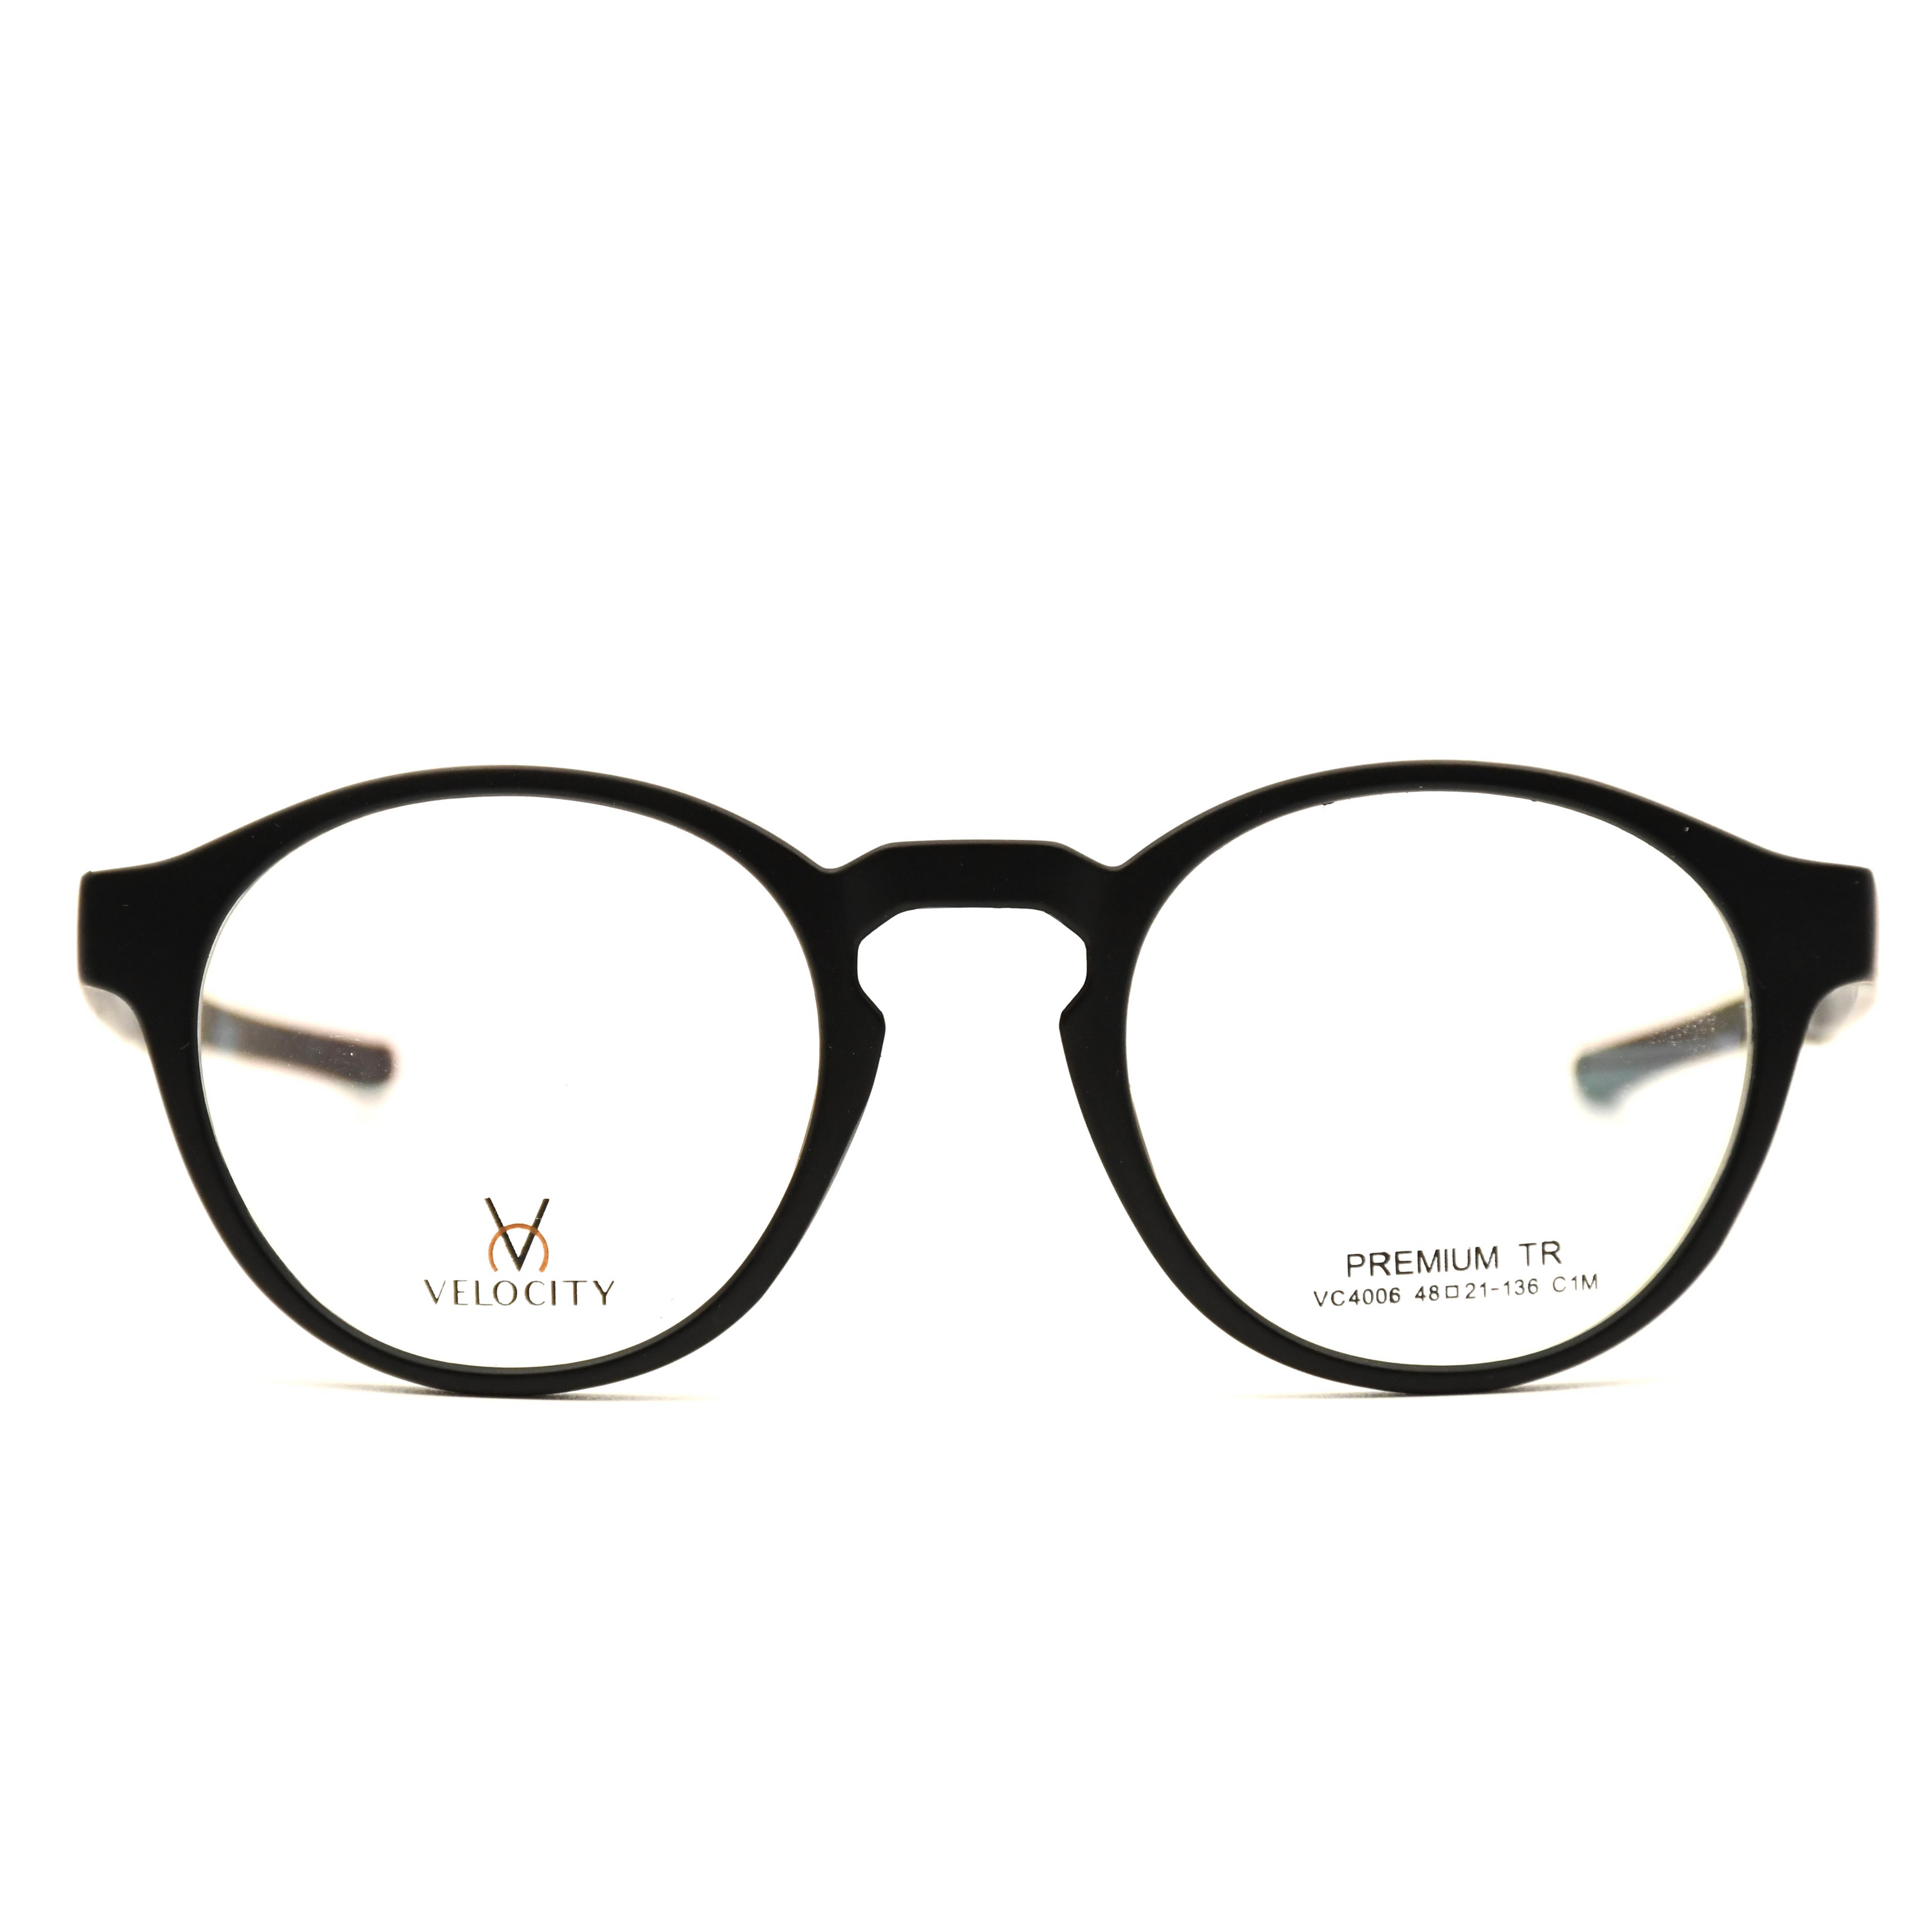 Velocity Full Rim Eyeglasses - 4006C-C1MG